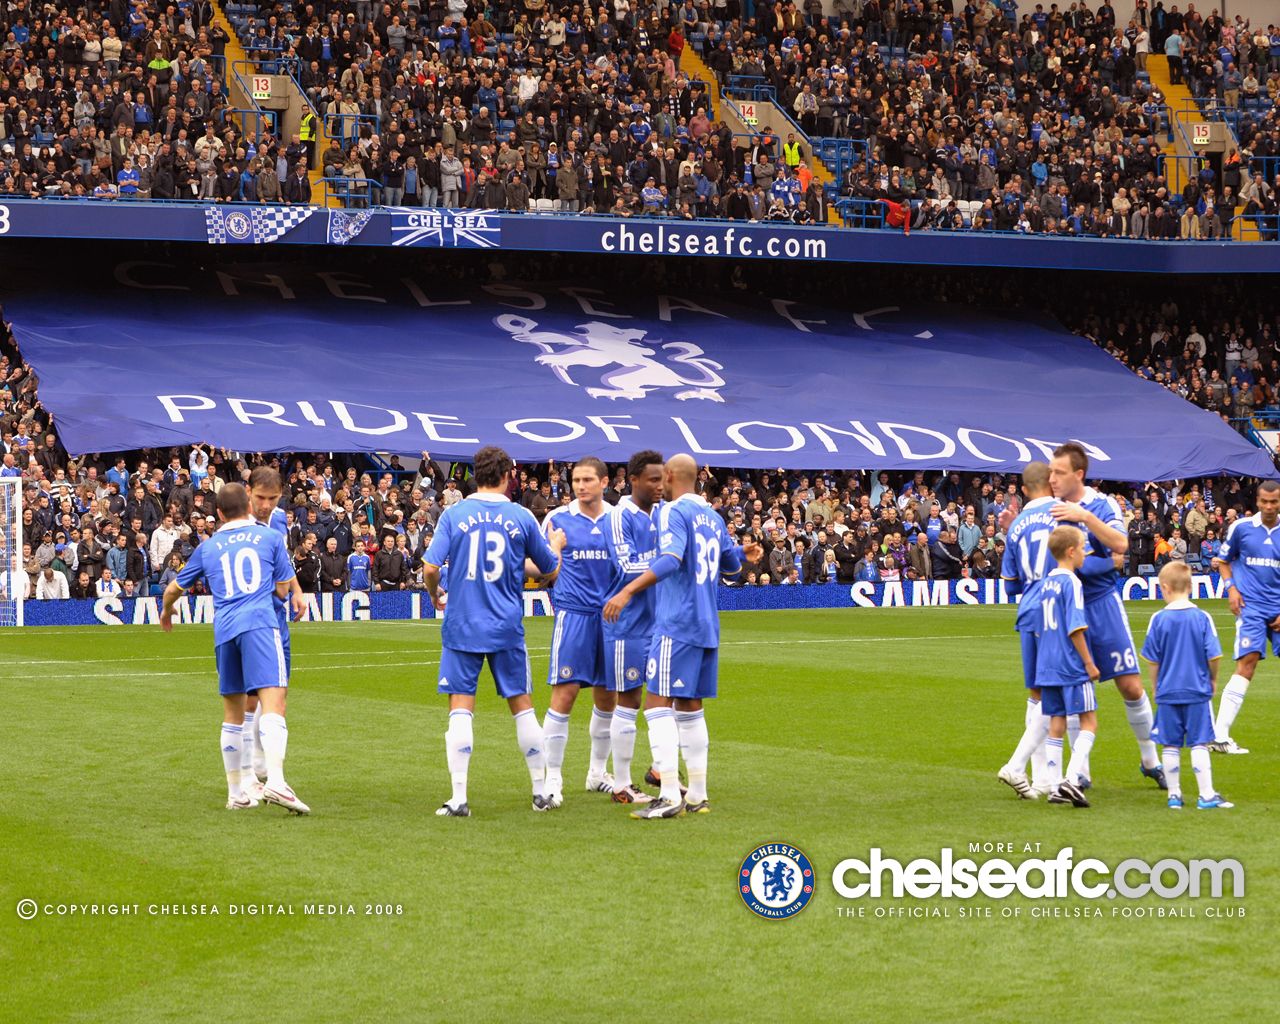 Chelsea FC Wallpaper Kumpulan Foto Chelsea FC